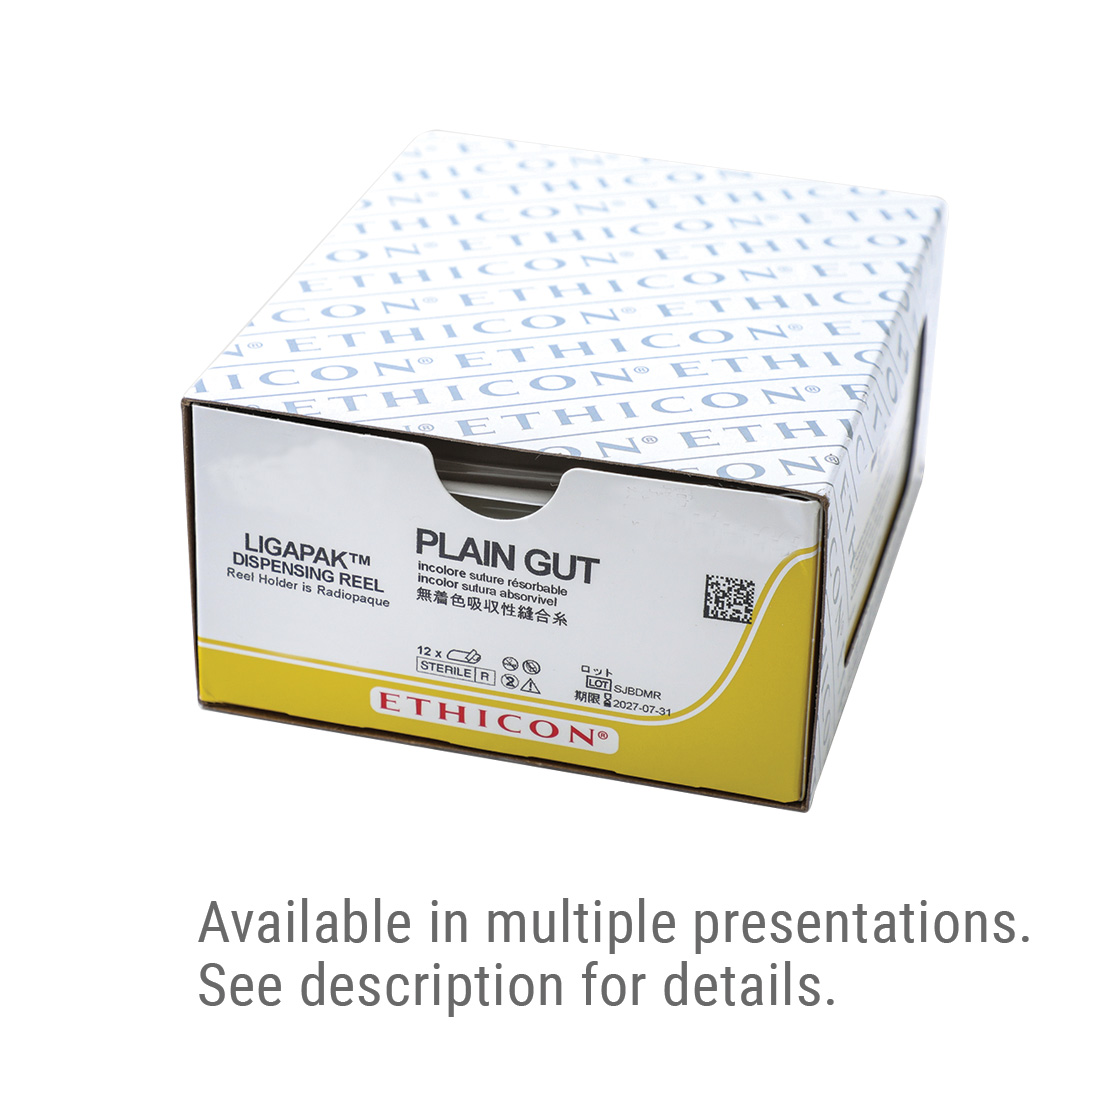 Plain Gut Suture, 3-0, LIGAPAK Reel, 54" Length - 12/Box